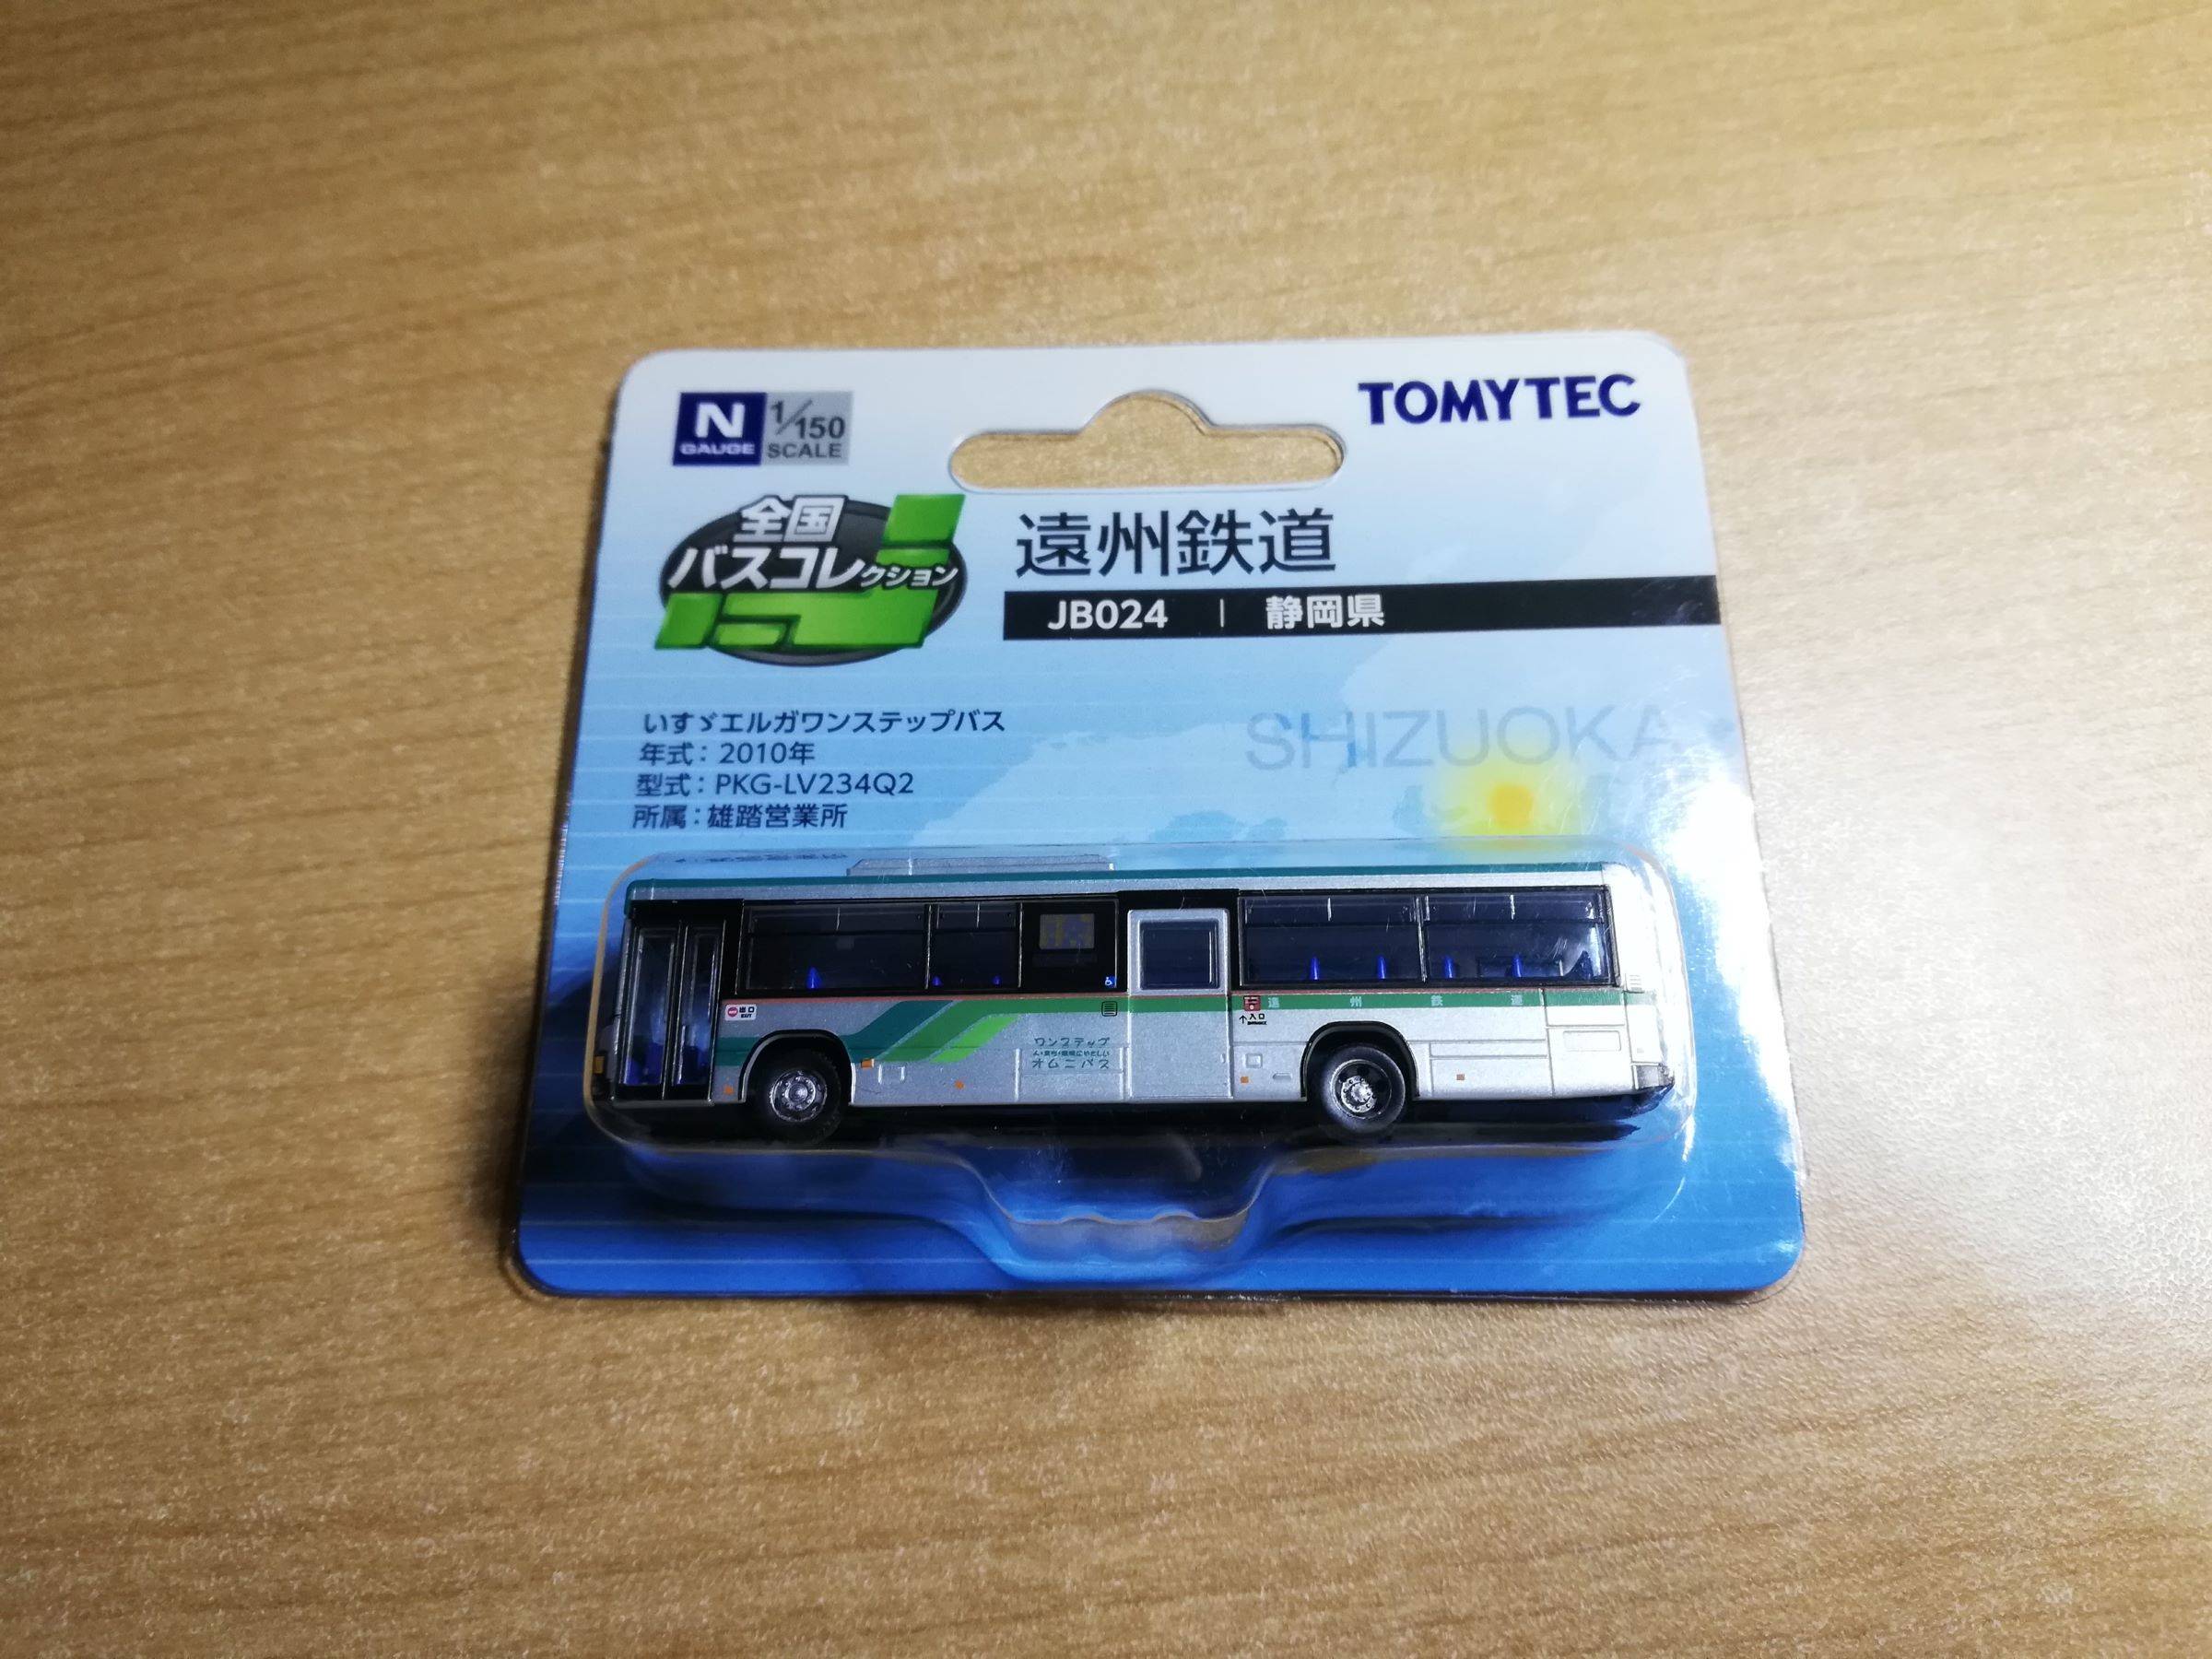 Tomytec N Scale Komono 122 Bus Stop C 1//150 213 for sale online